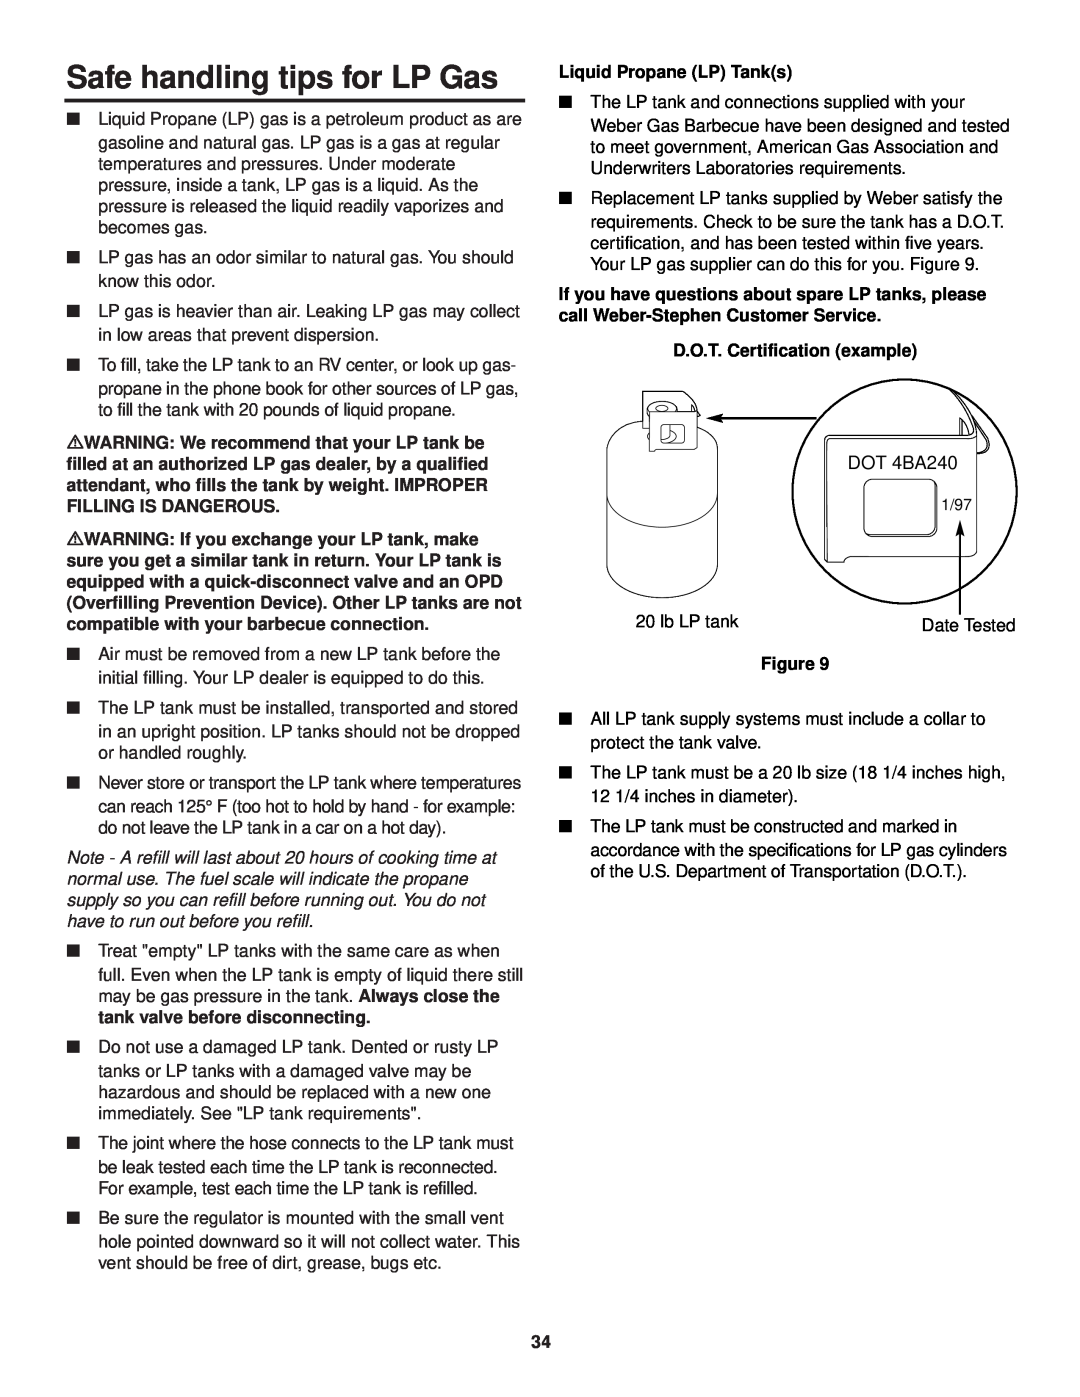 Weber 3400 Series Safe handling tips for LP Gas, DOT 4BA240, Liquid Propane LP Tanks, D.O.T. Certification example 